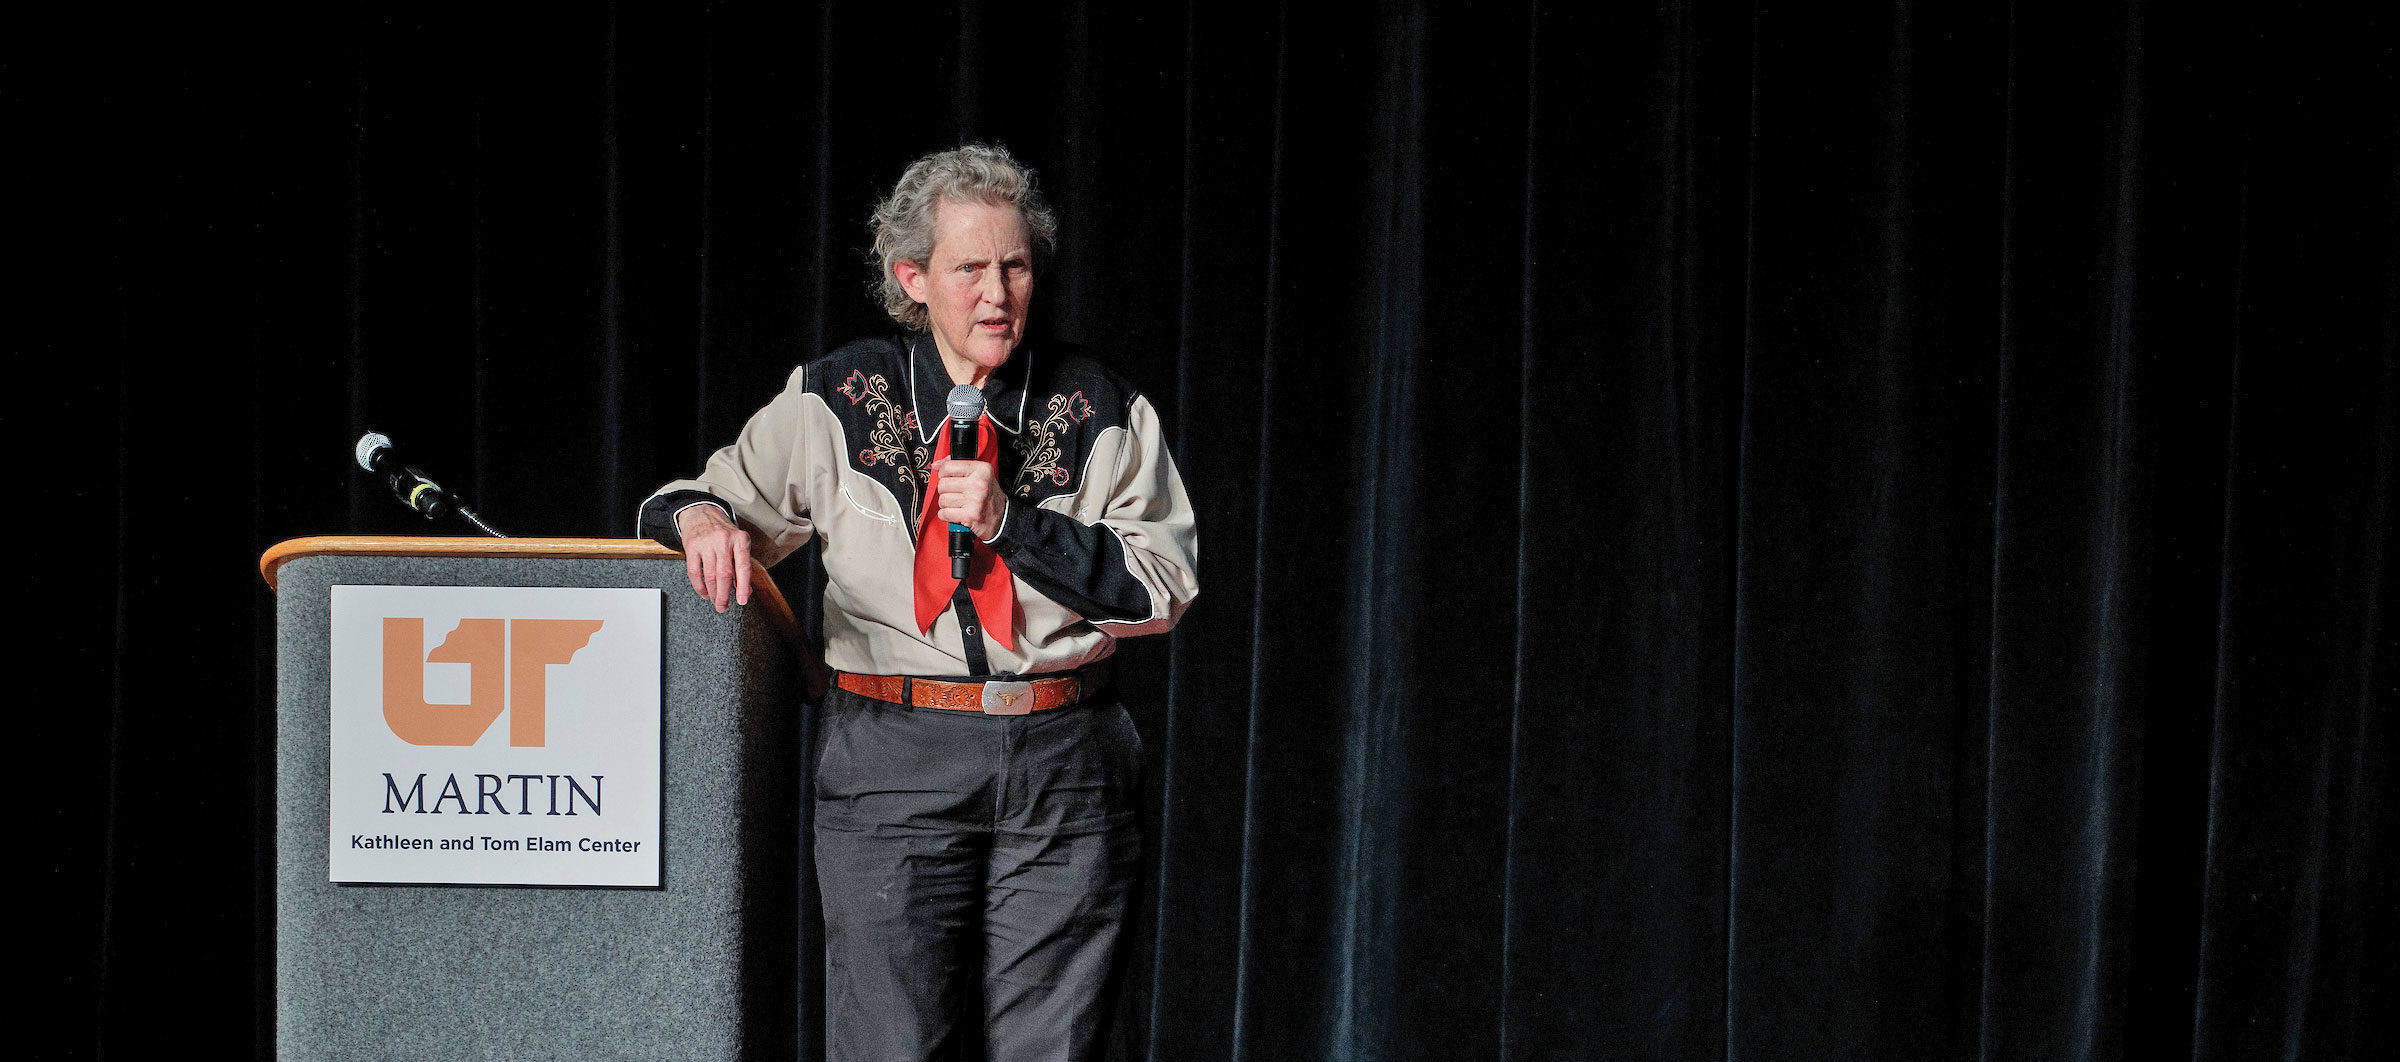 Temple Grandin onstage at UT Martin